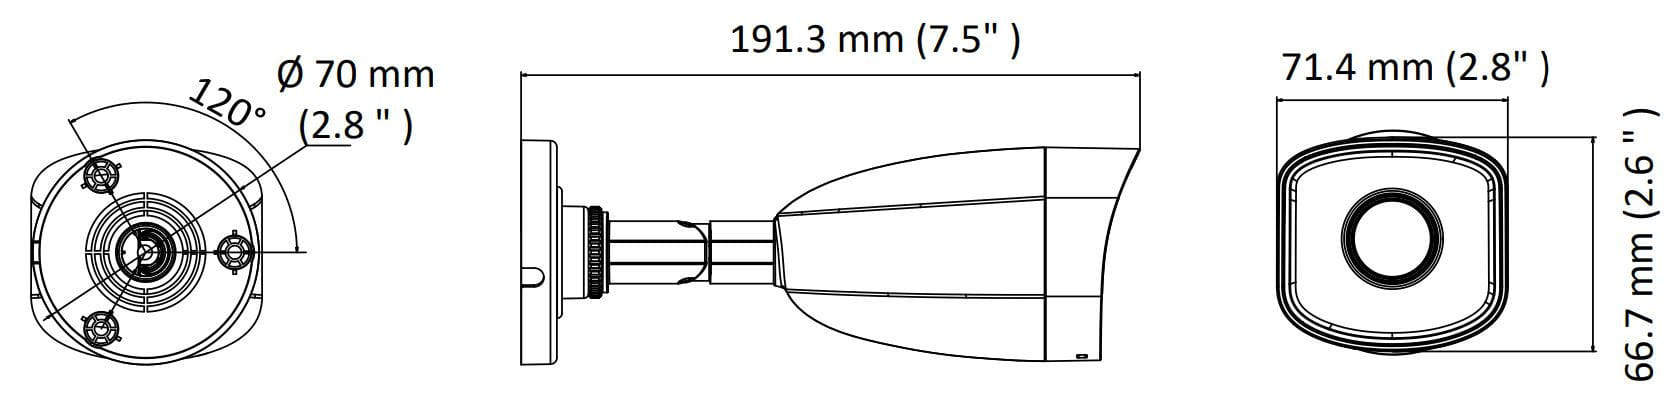 tube-4mp-ip-fixe-schema